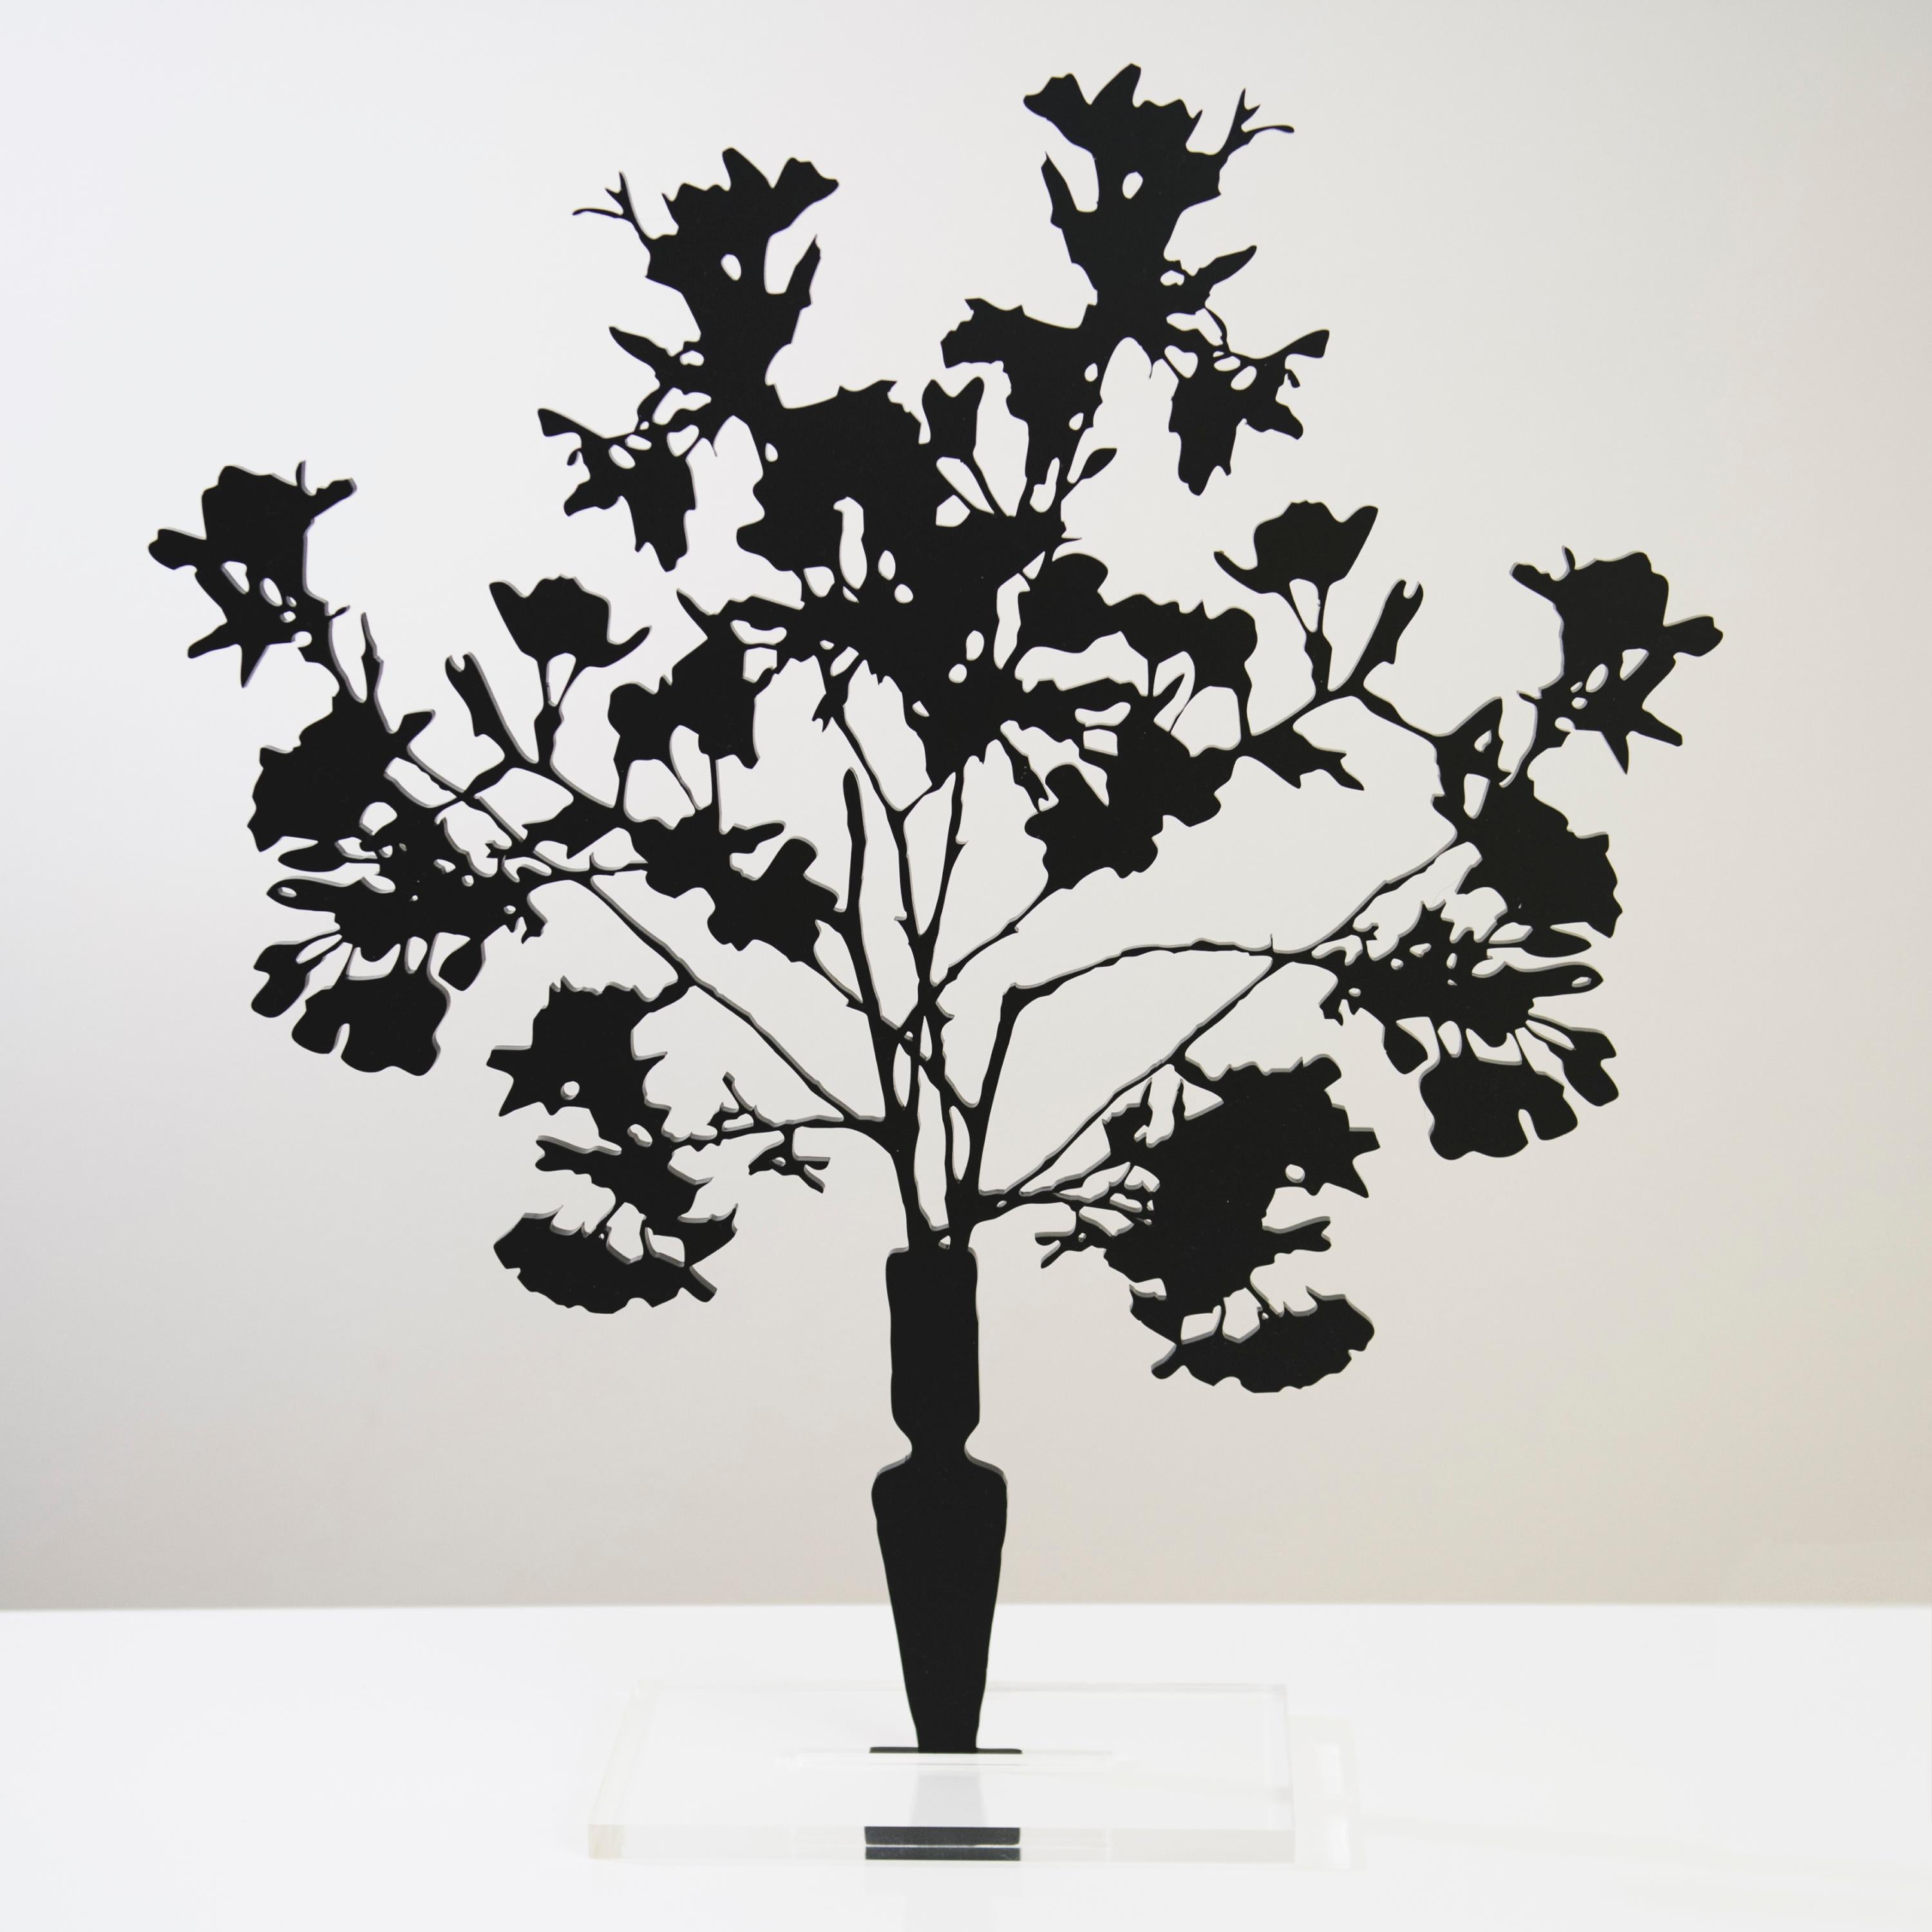 Joana P. Cardozo Abstract Sculpture - Cherry Blossoms - Floral black shadow flower bouquet sculpture